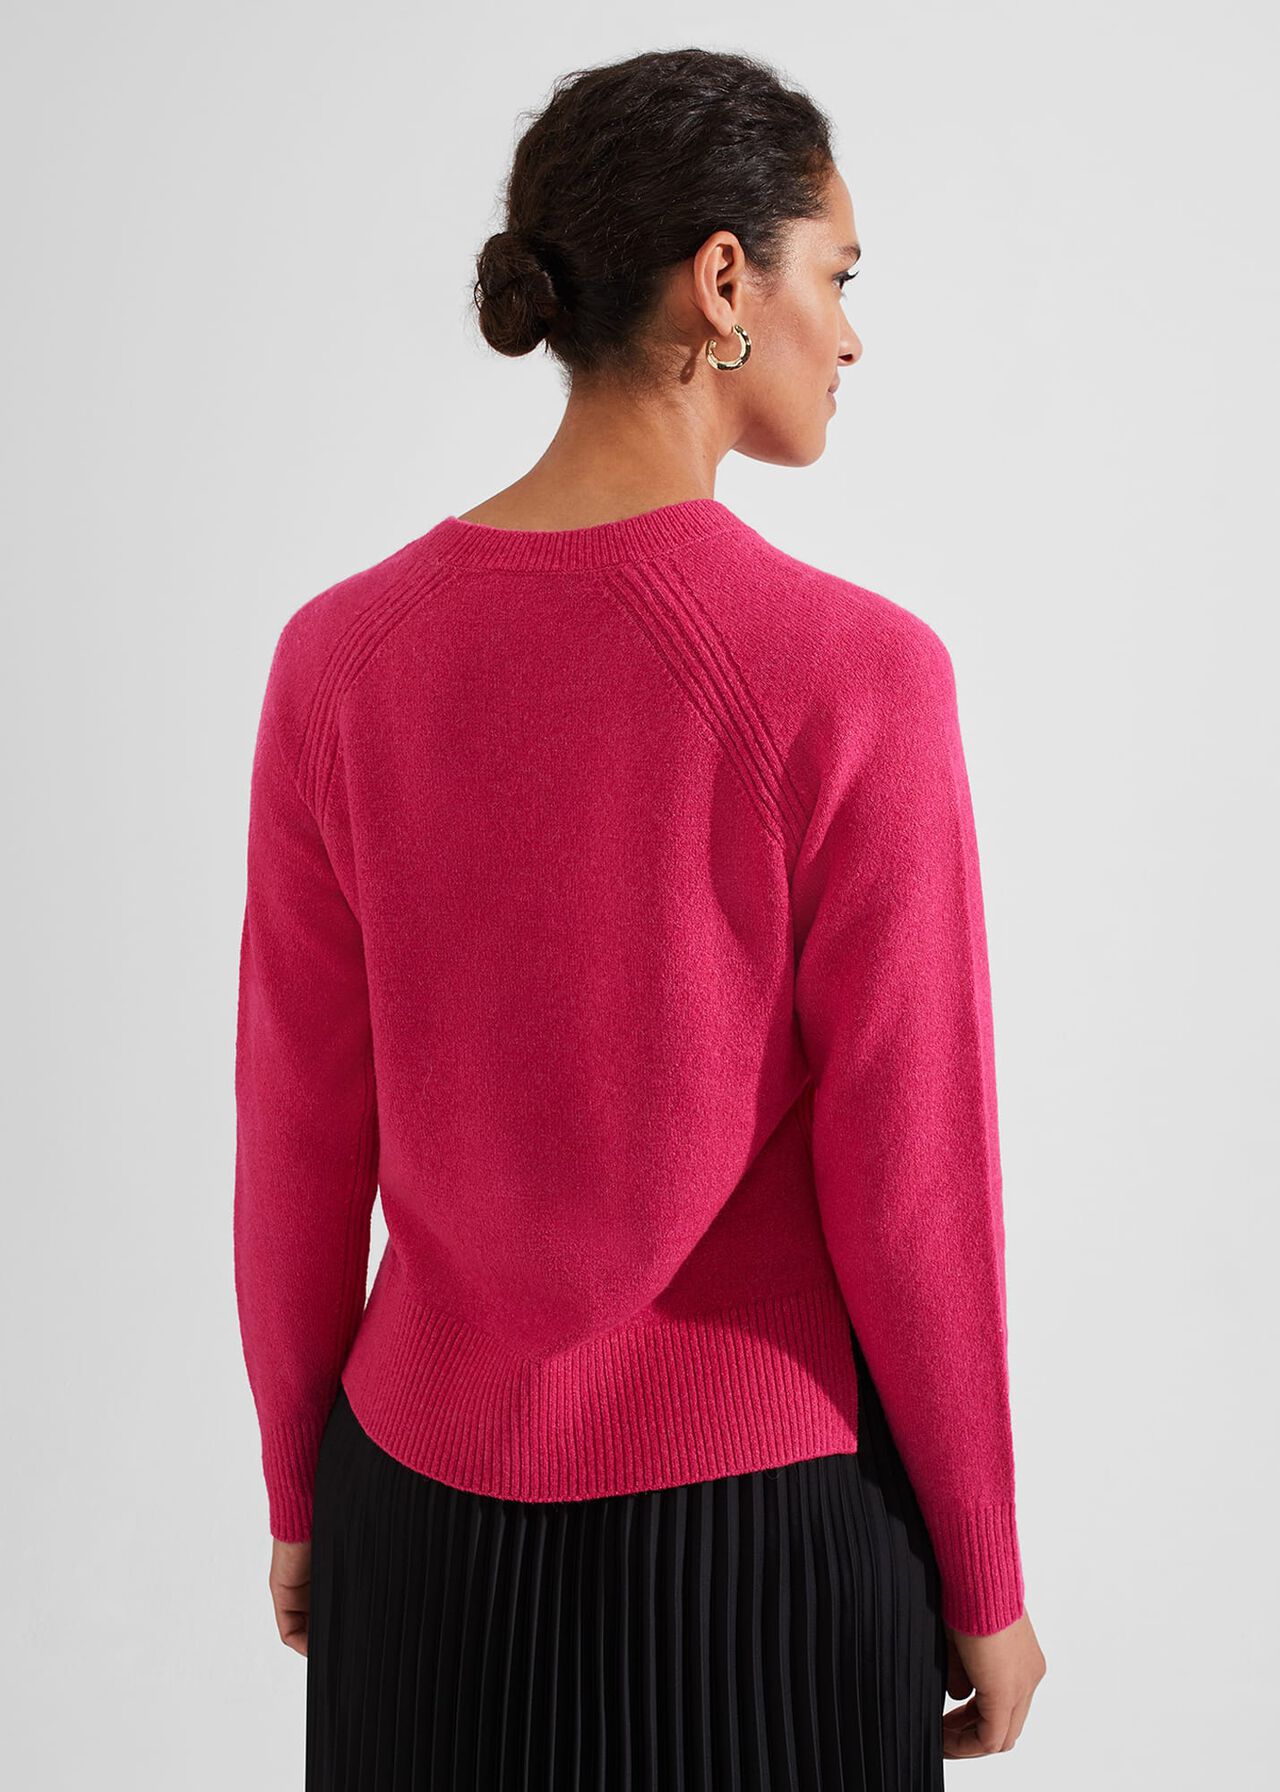 Adriel Sweater With Alpaca, Sapphire Pink, hi-res